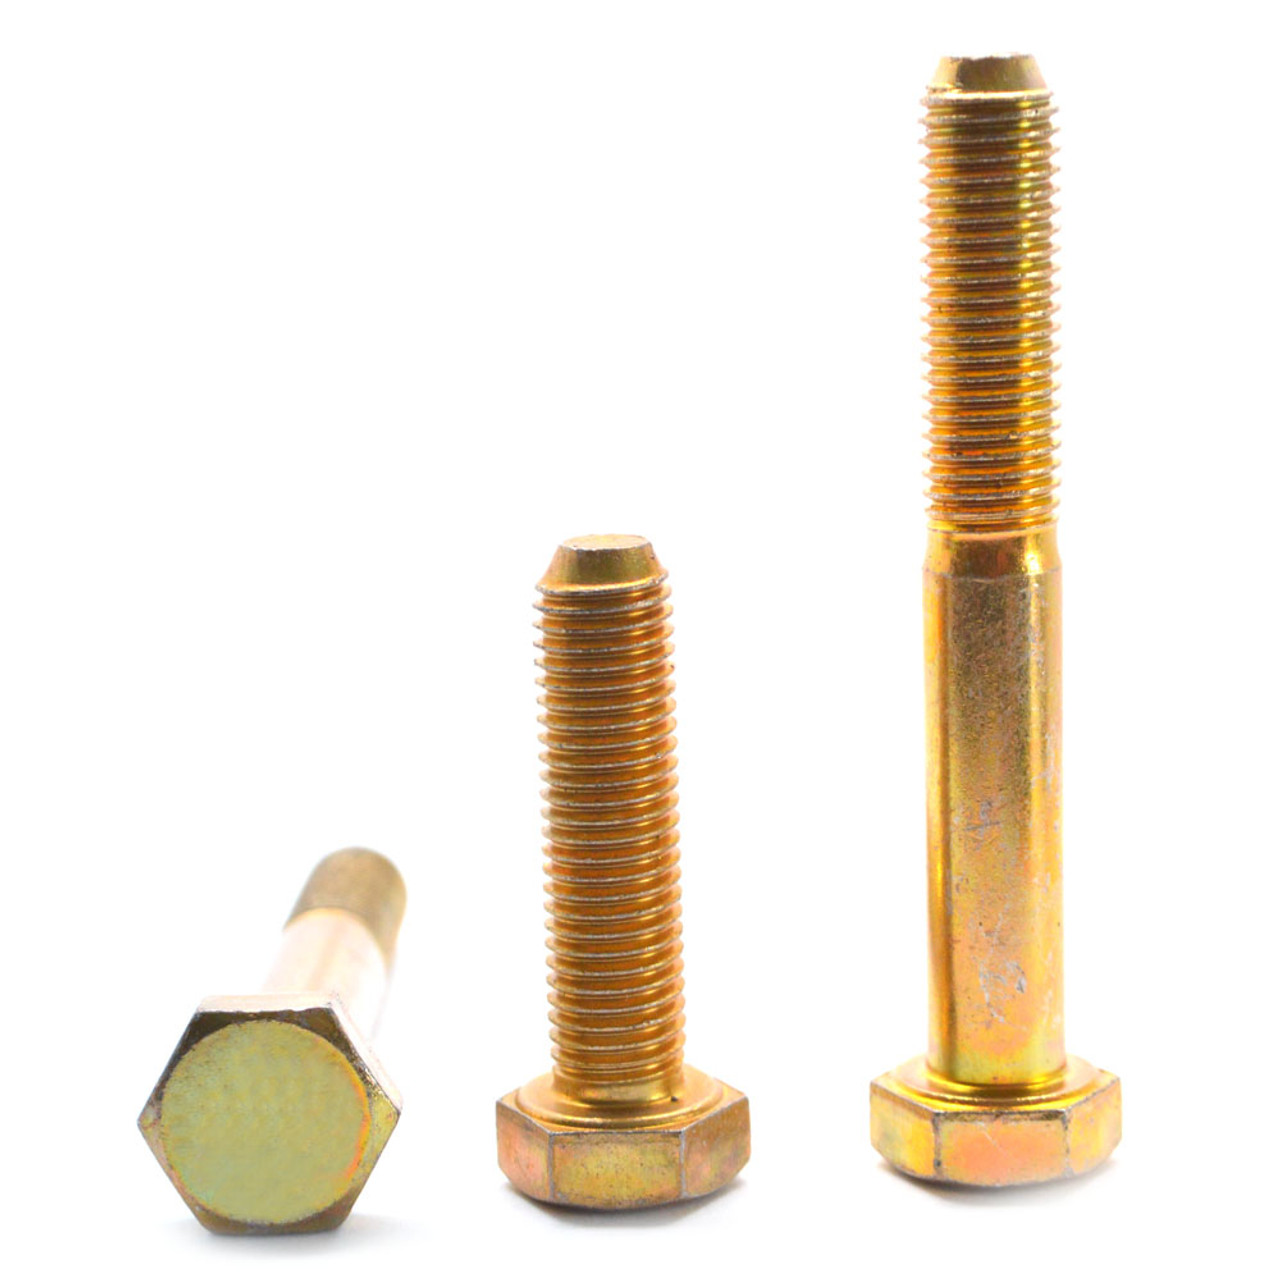 M10 x 1.50 x 80 MM (PT) Coarse Thread DIN 931 Class 10.9 Hex Cap Screw (Bolt) Alloy Steel Yellow Zinc Plated